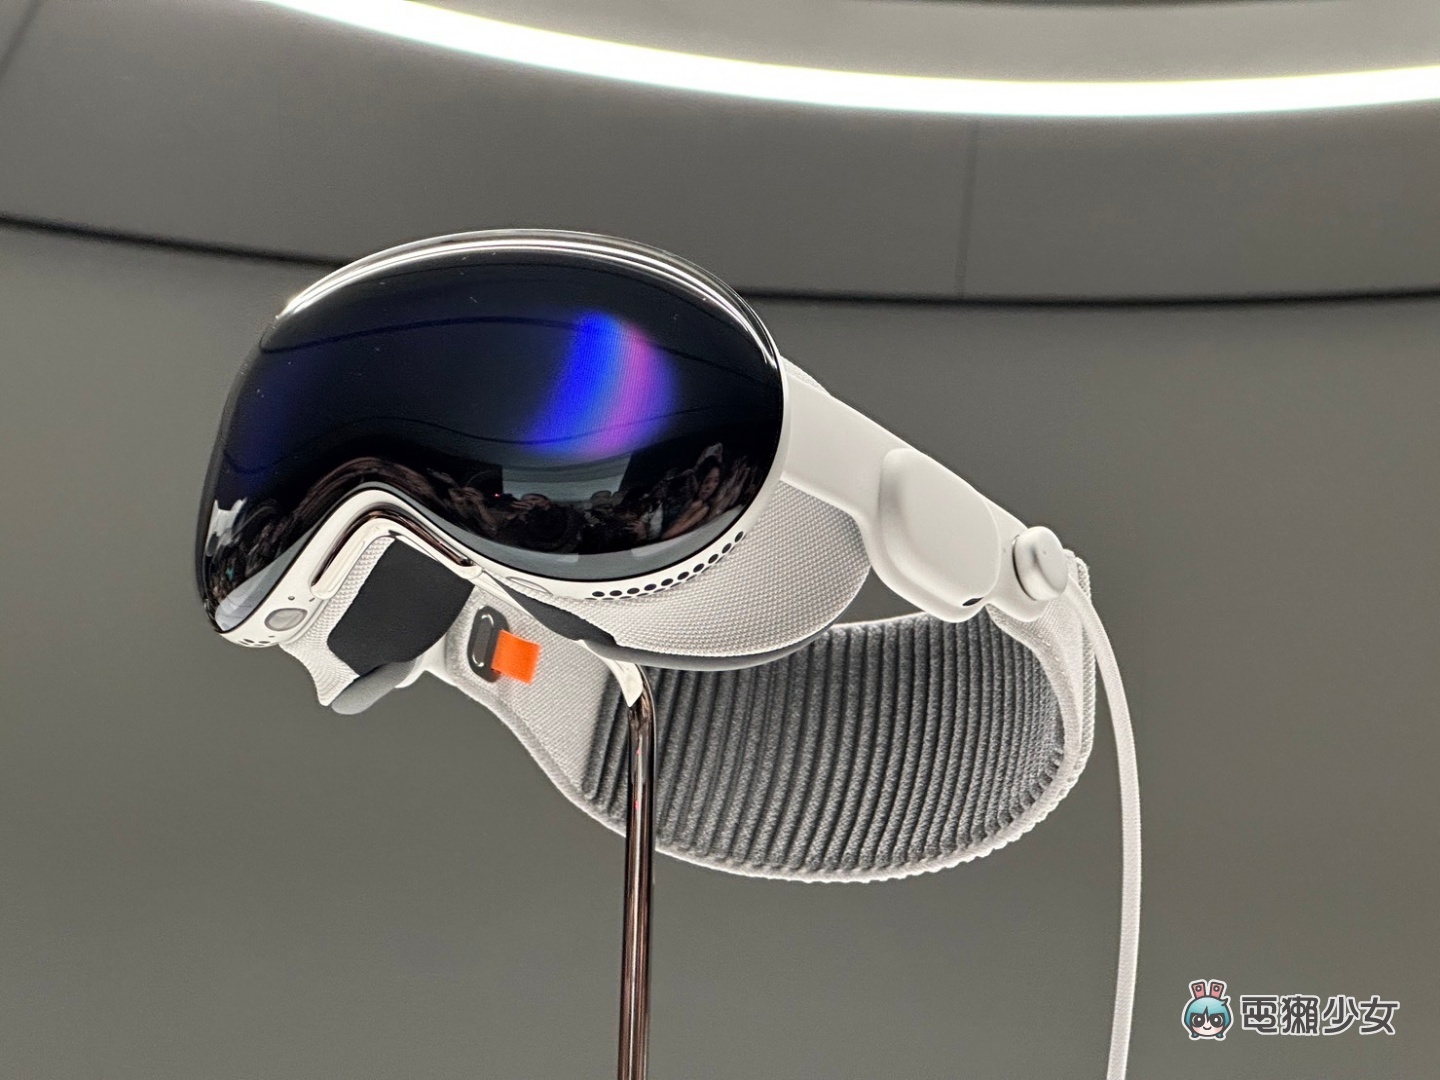 Apple 頭戴裝置 Vision Pro 亮點懶人包！售價約 10.7 萬元你買嗎？預計 2024 年正式開賣